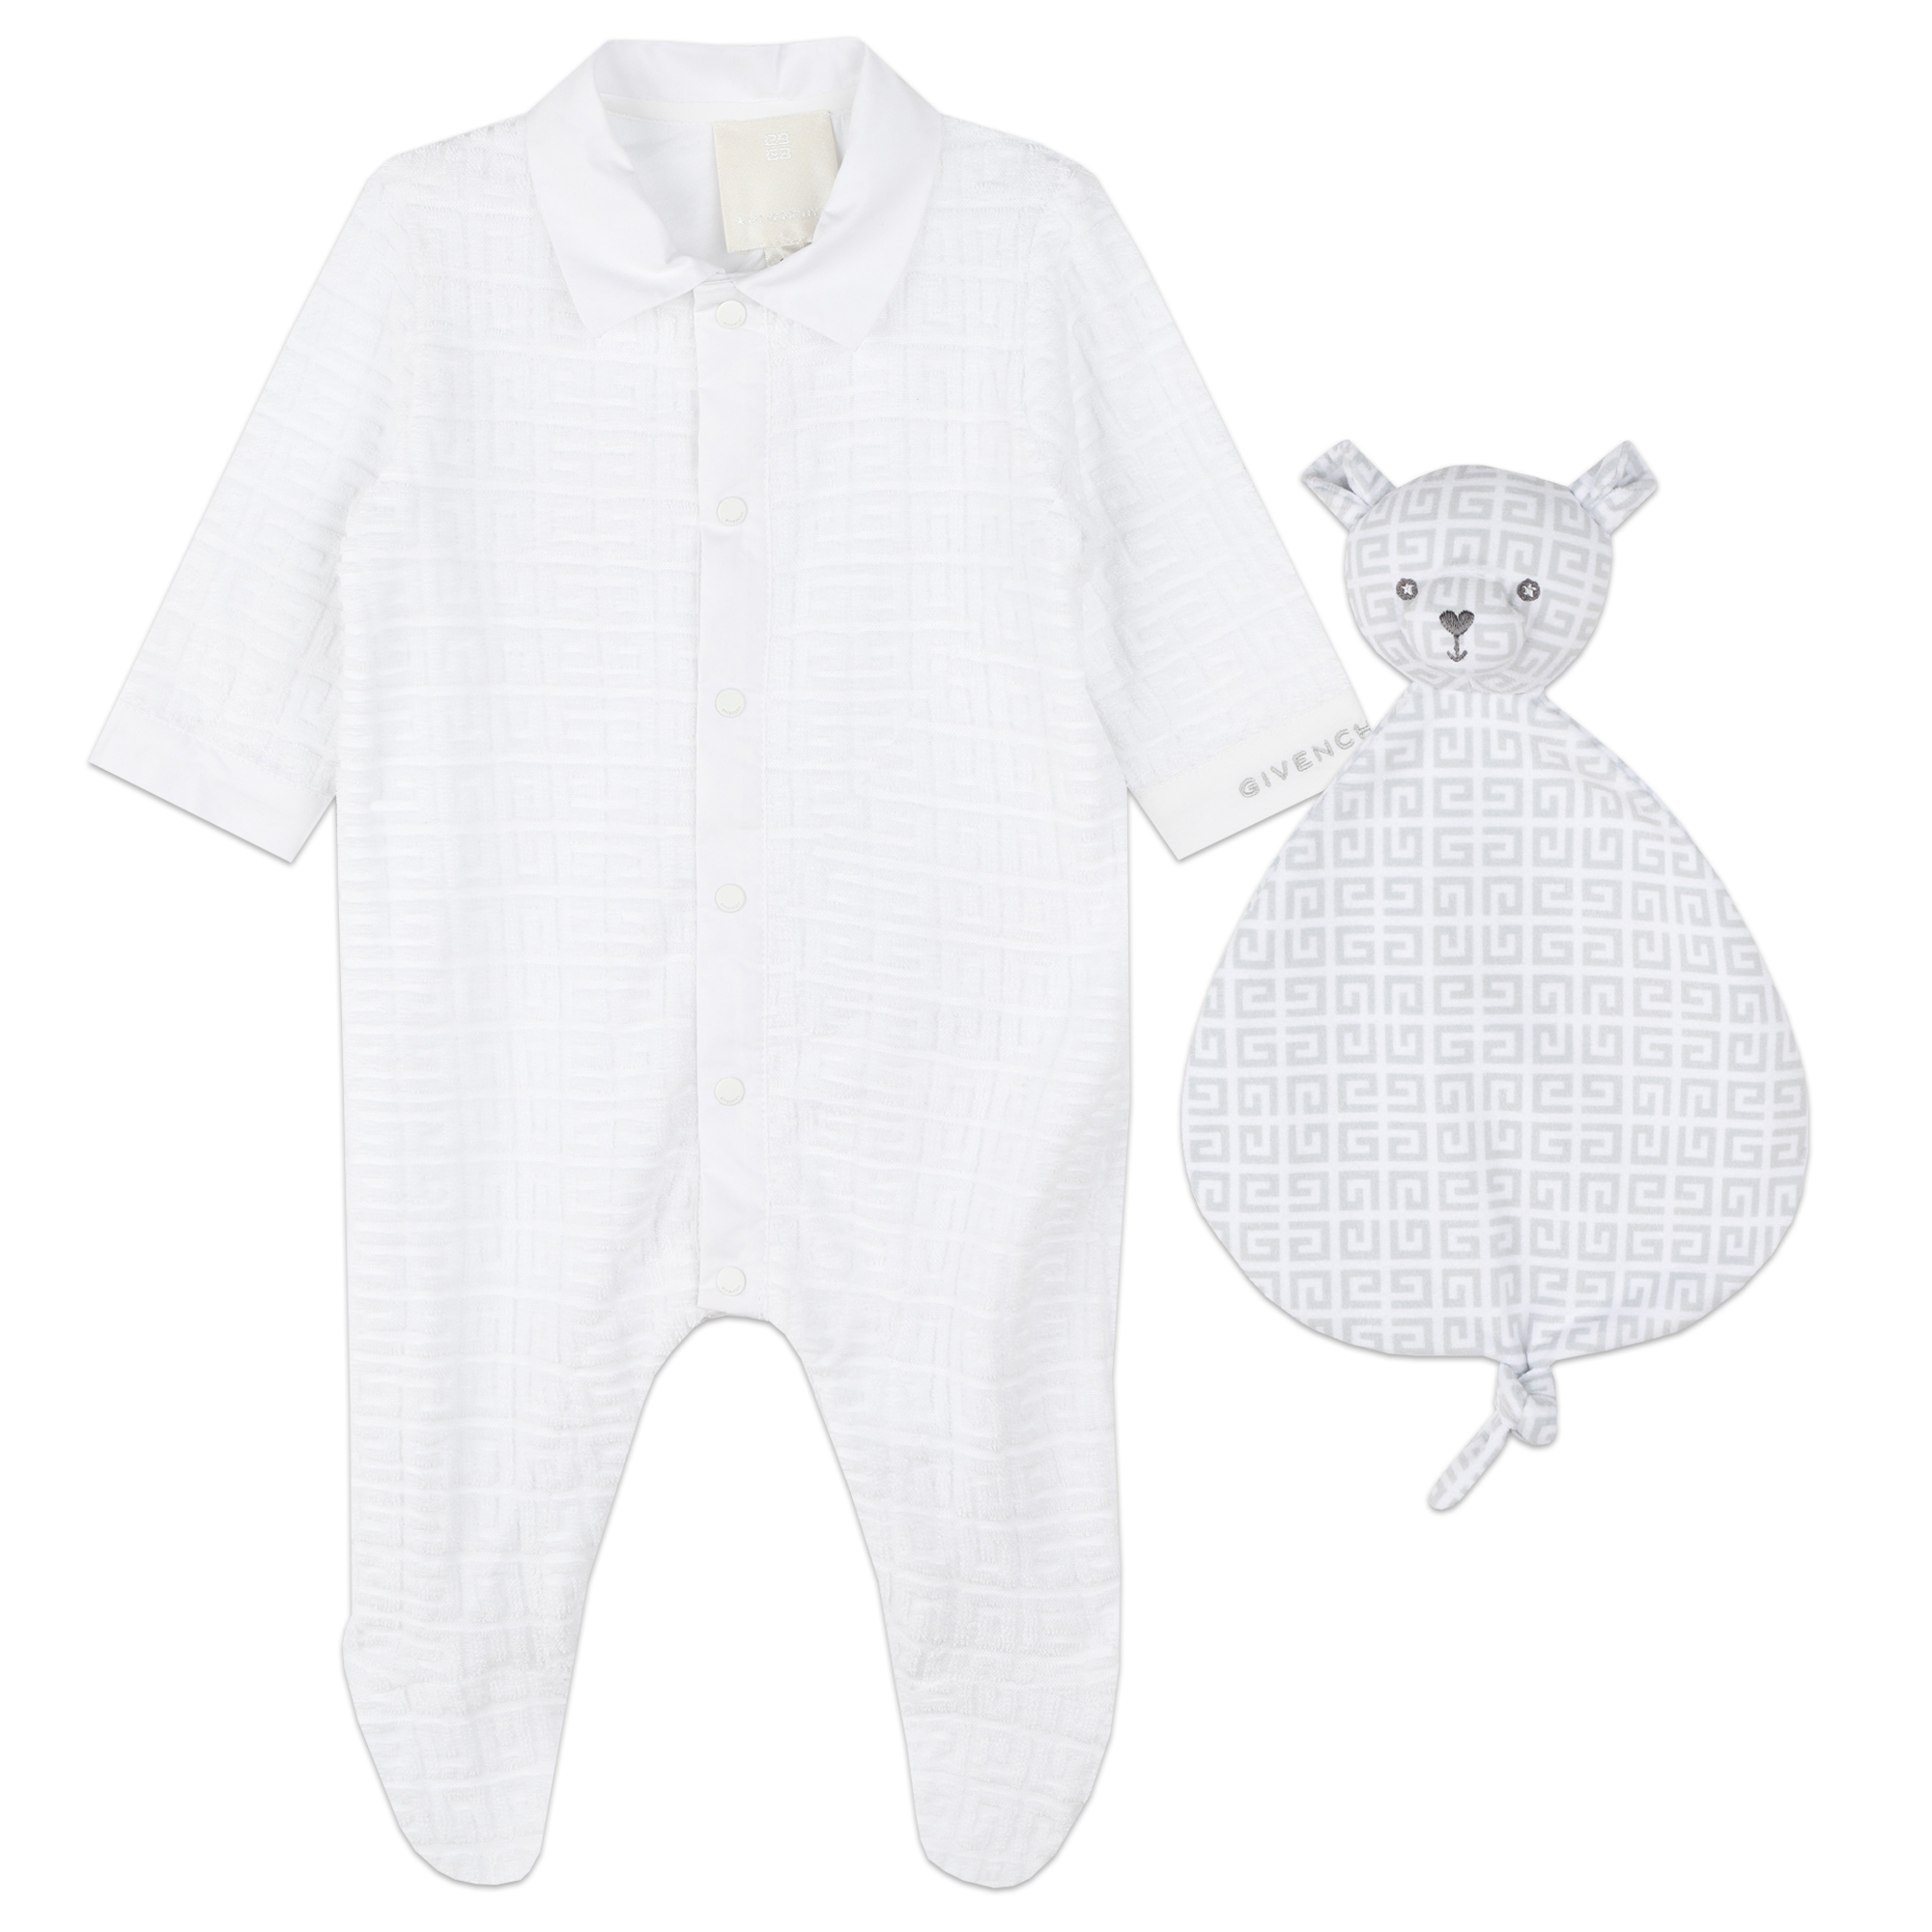 Pyjamas and soft toy set GIVENCHY for UNISEX